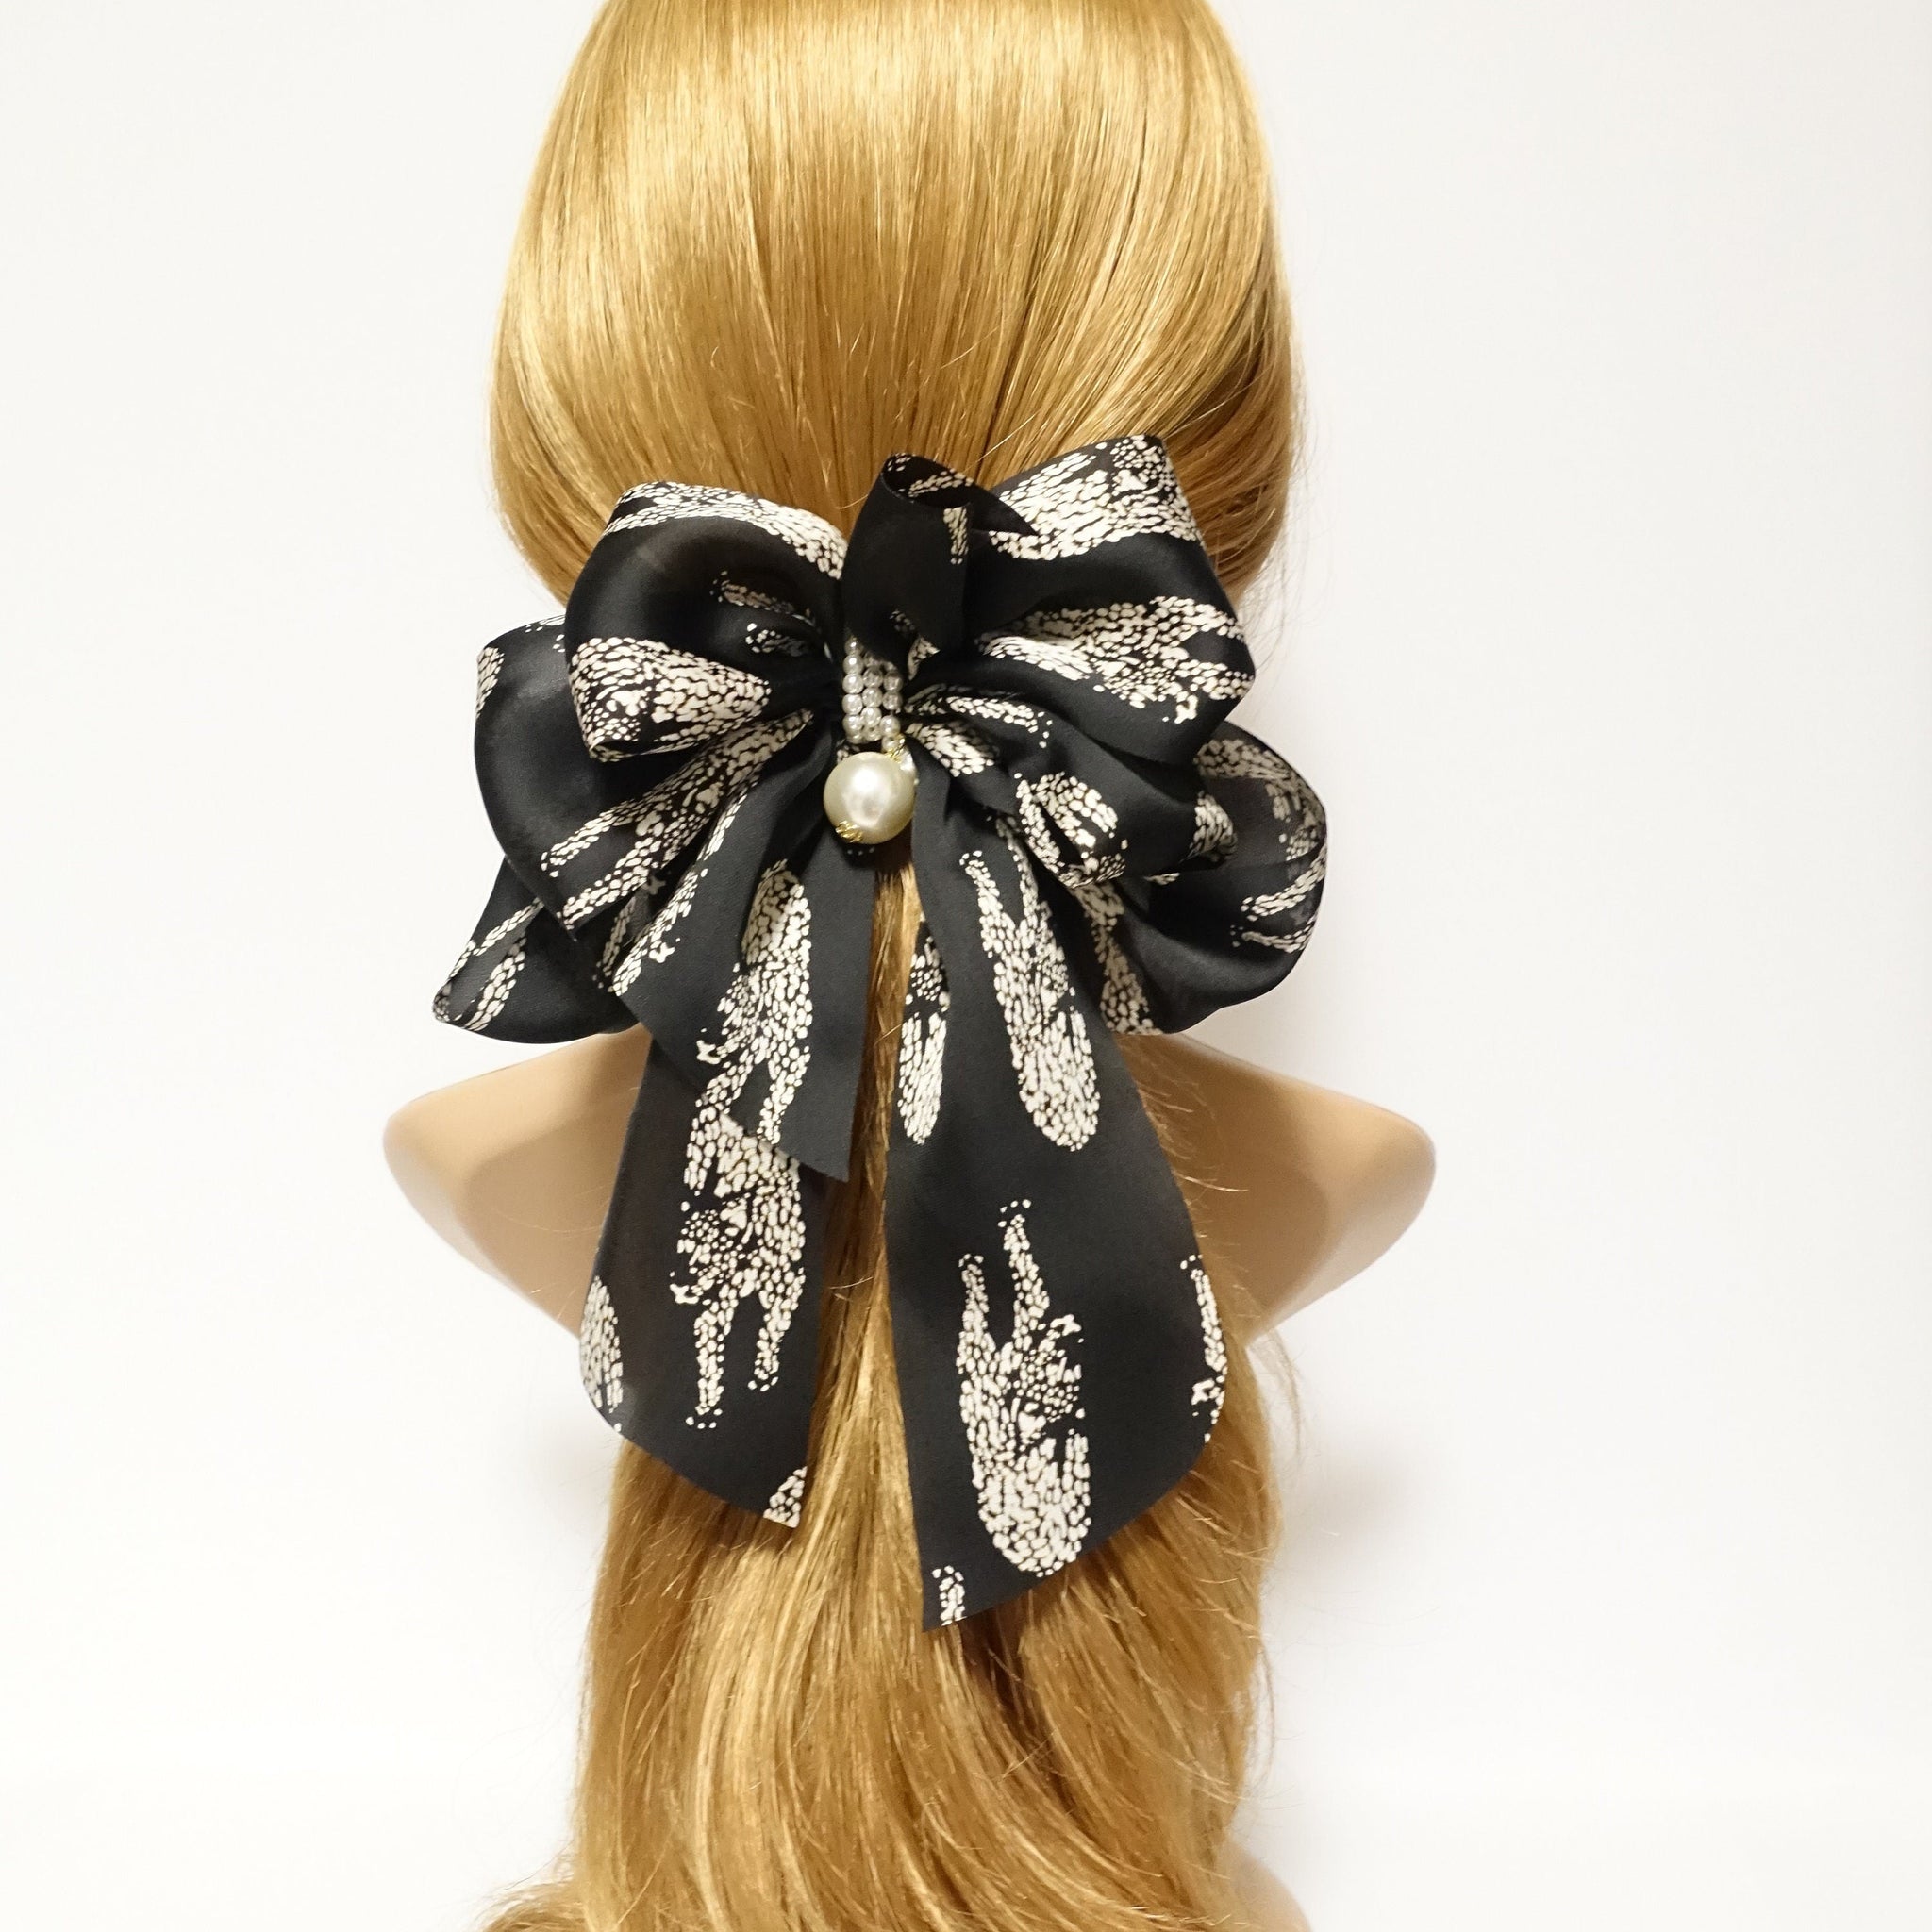 veryshine.com Barrette (Bow) Scarf pattern print chiffon bow french hair barrette women hair accessory leopard python skull hair bow